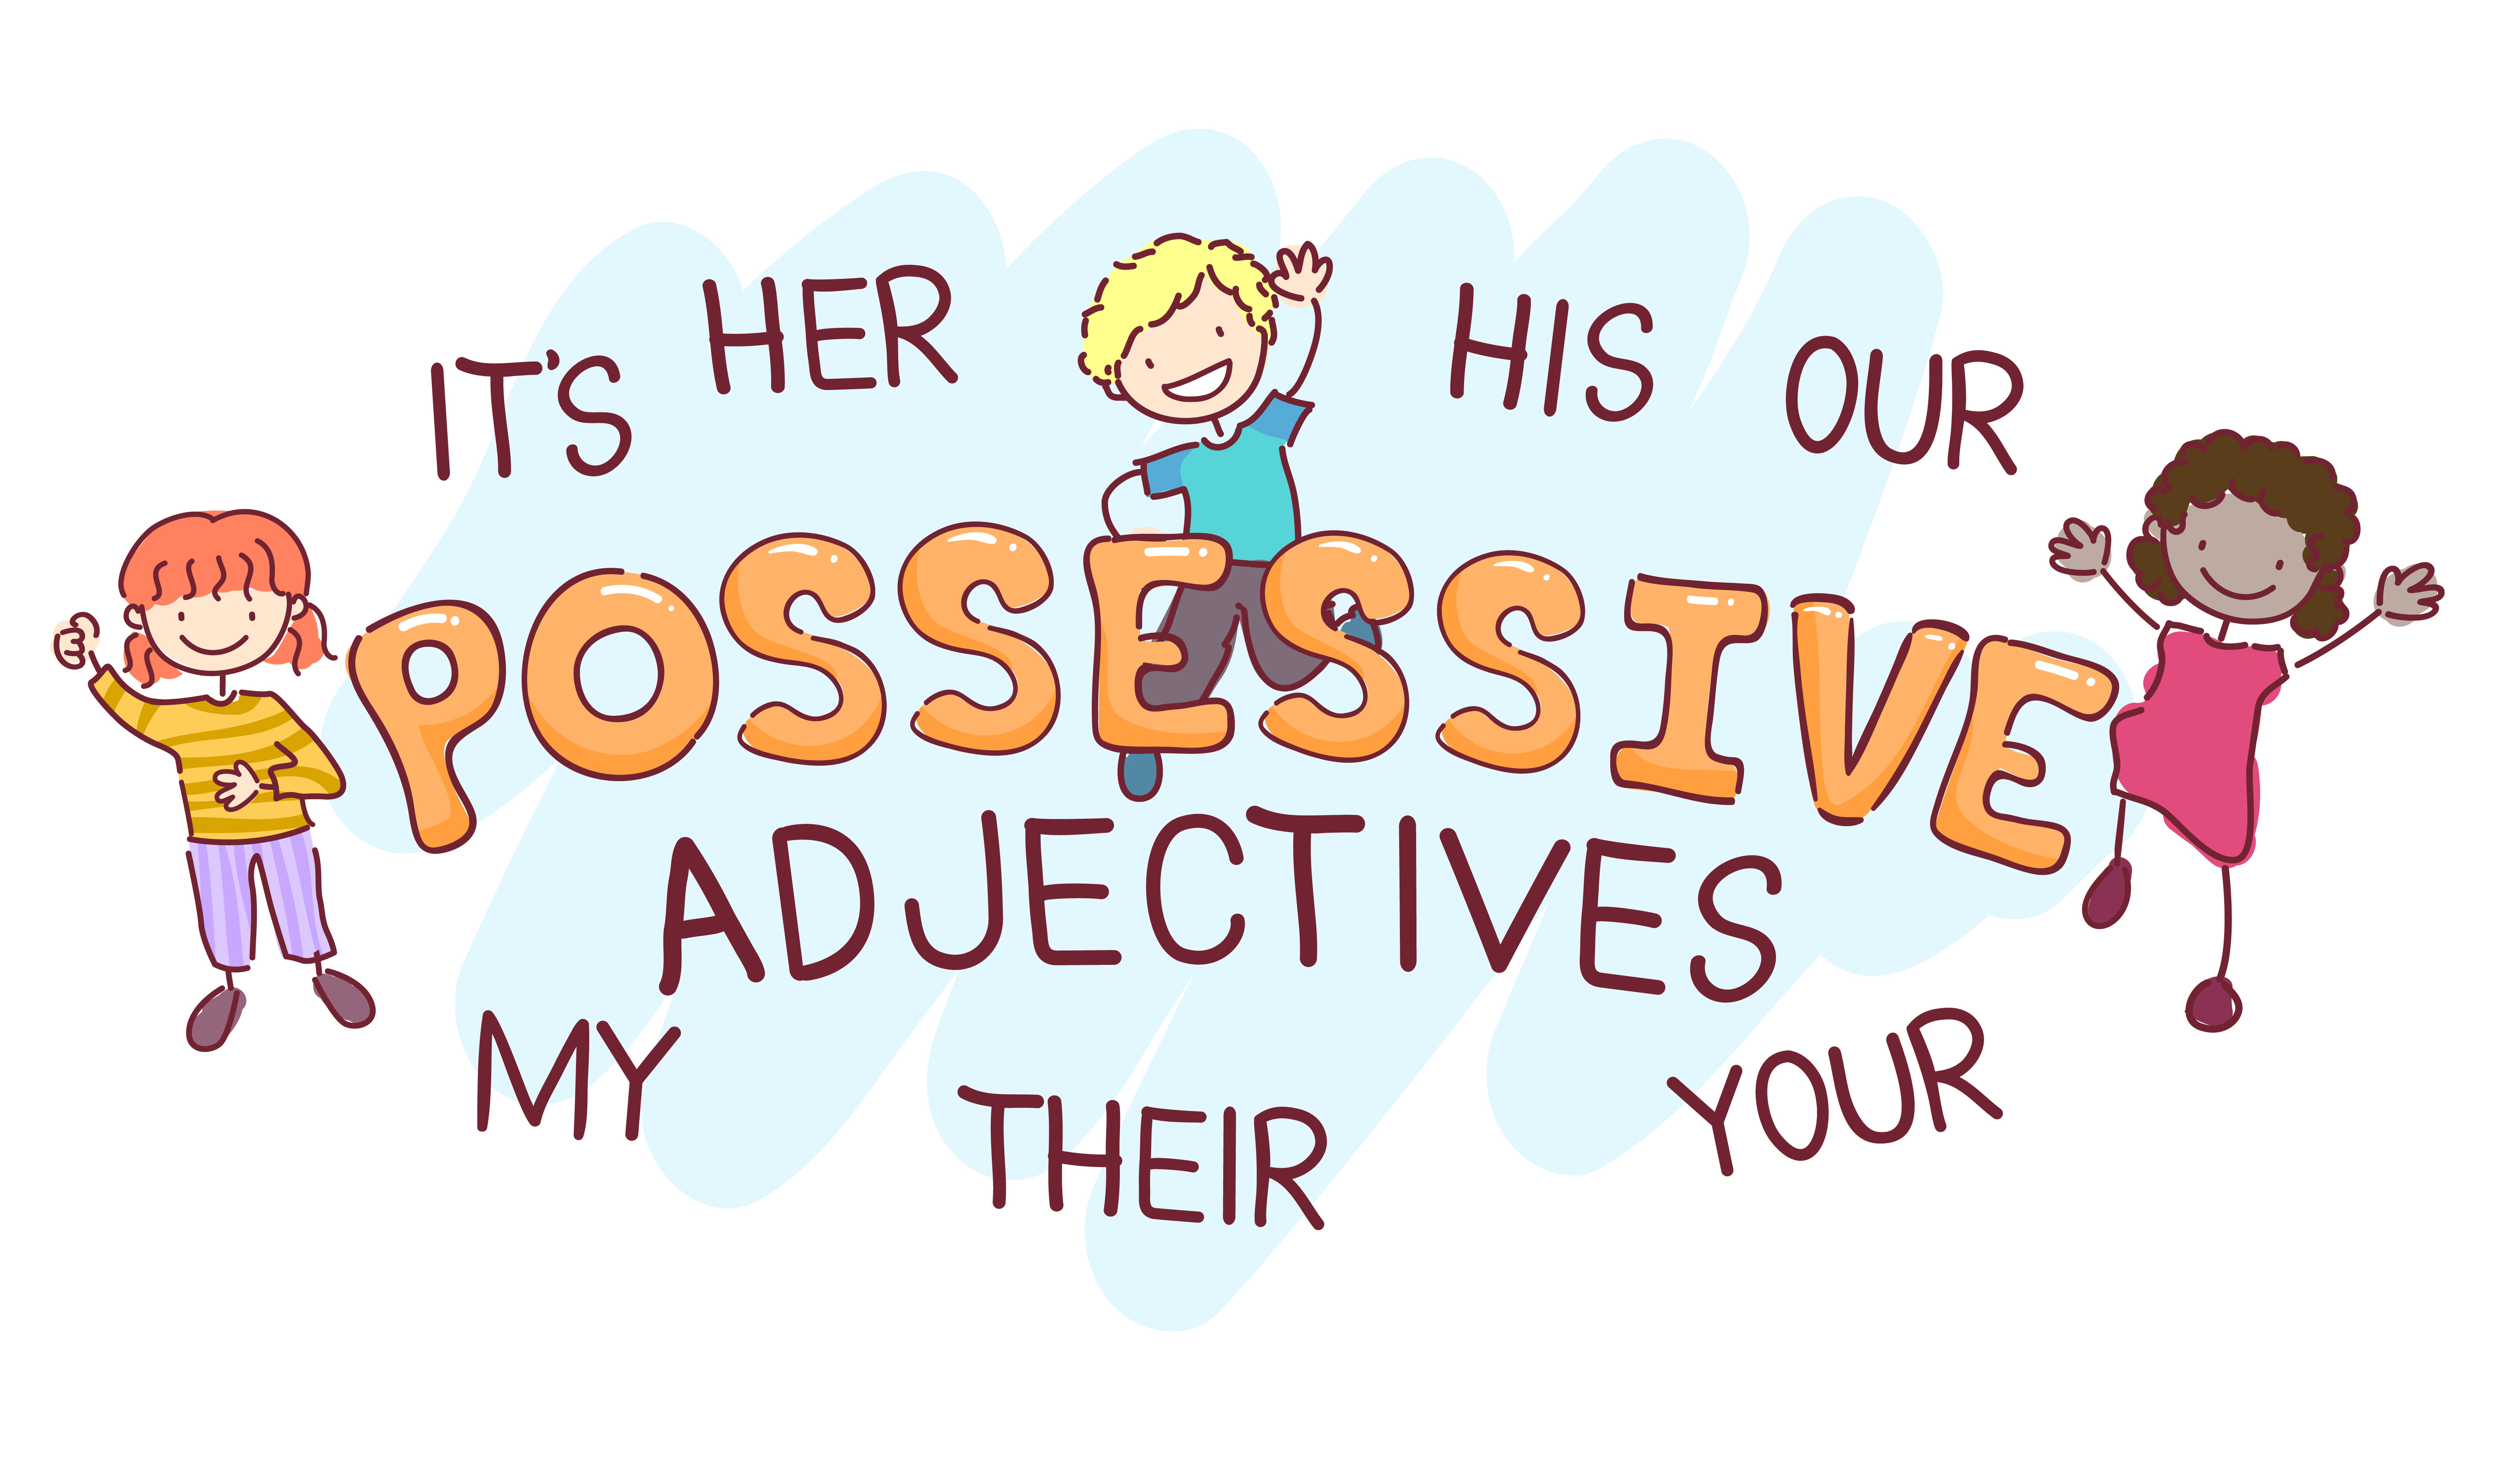 English possessive adjectives